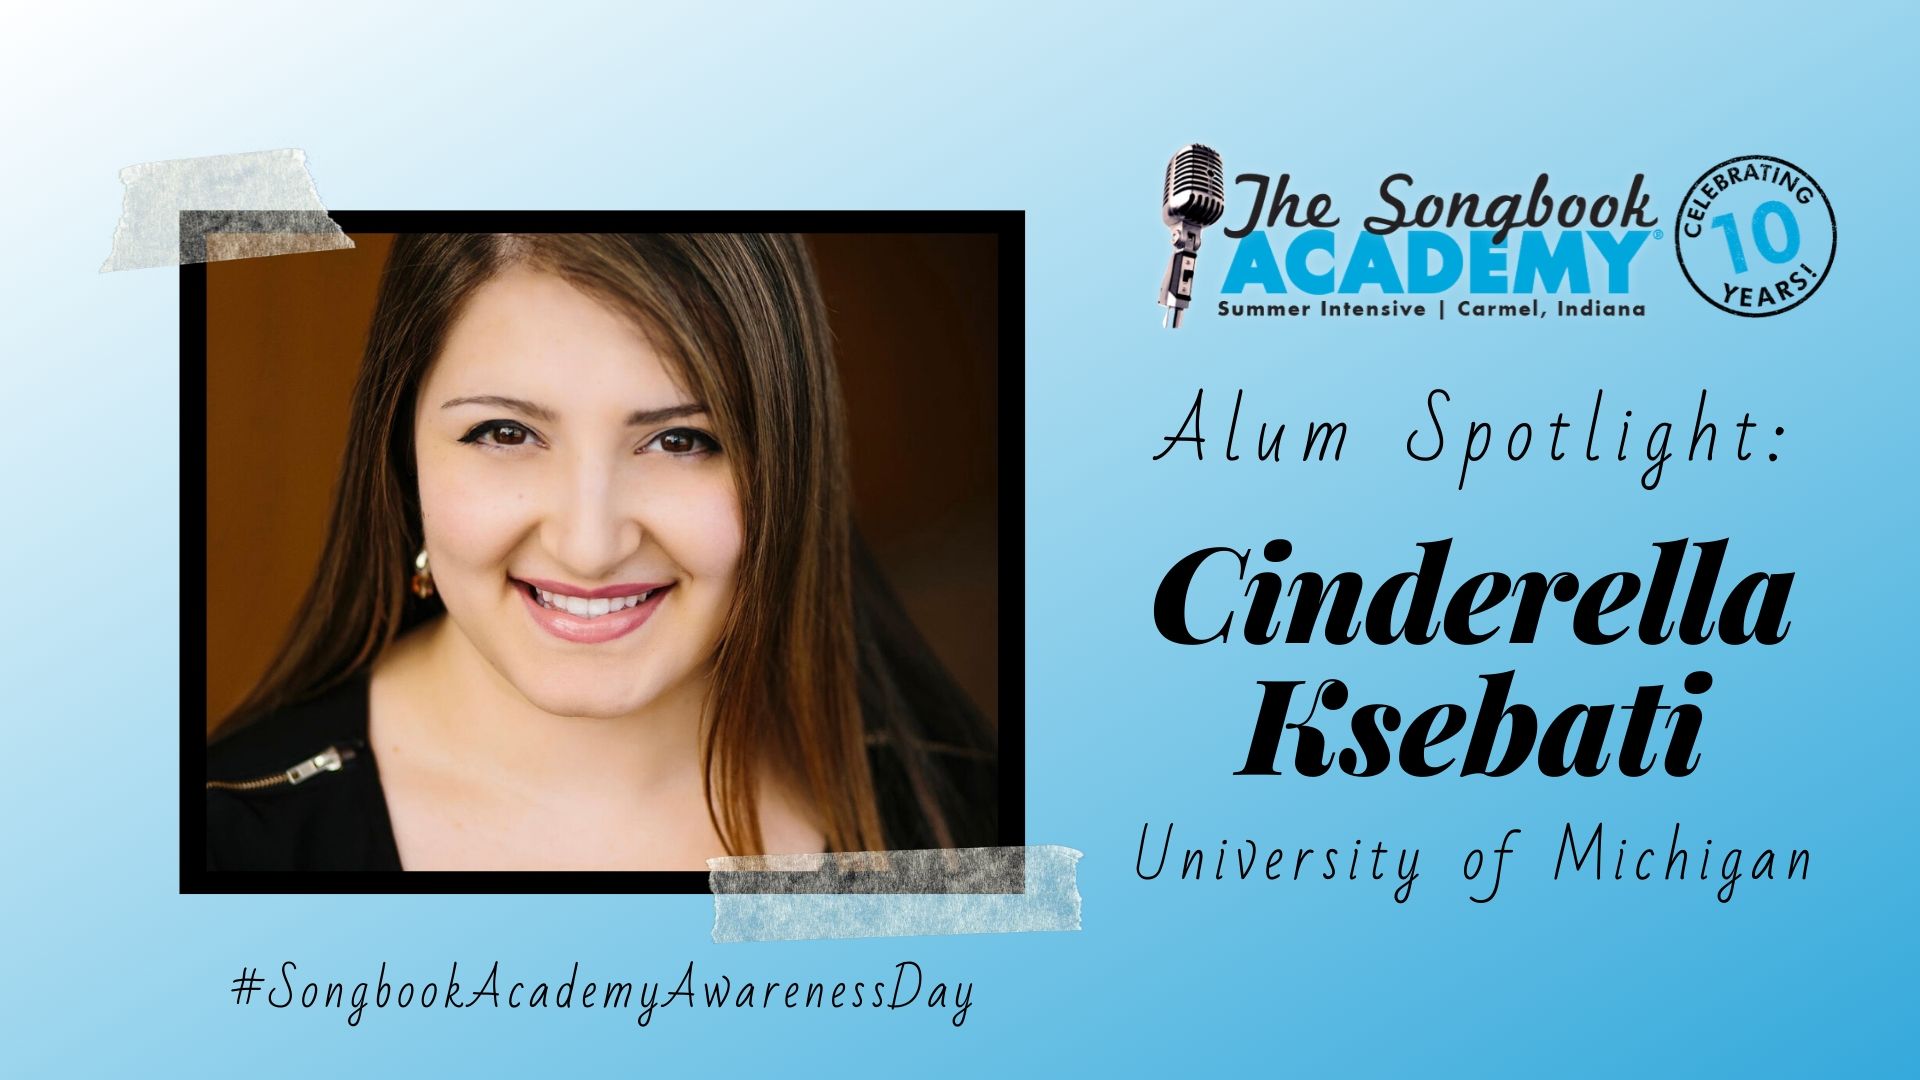 Alum Spotlight: Cinderella Ksebati. University of Michigan.